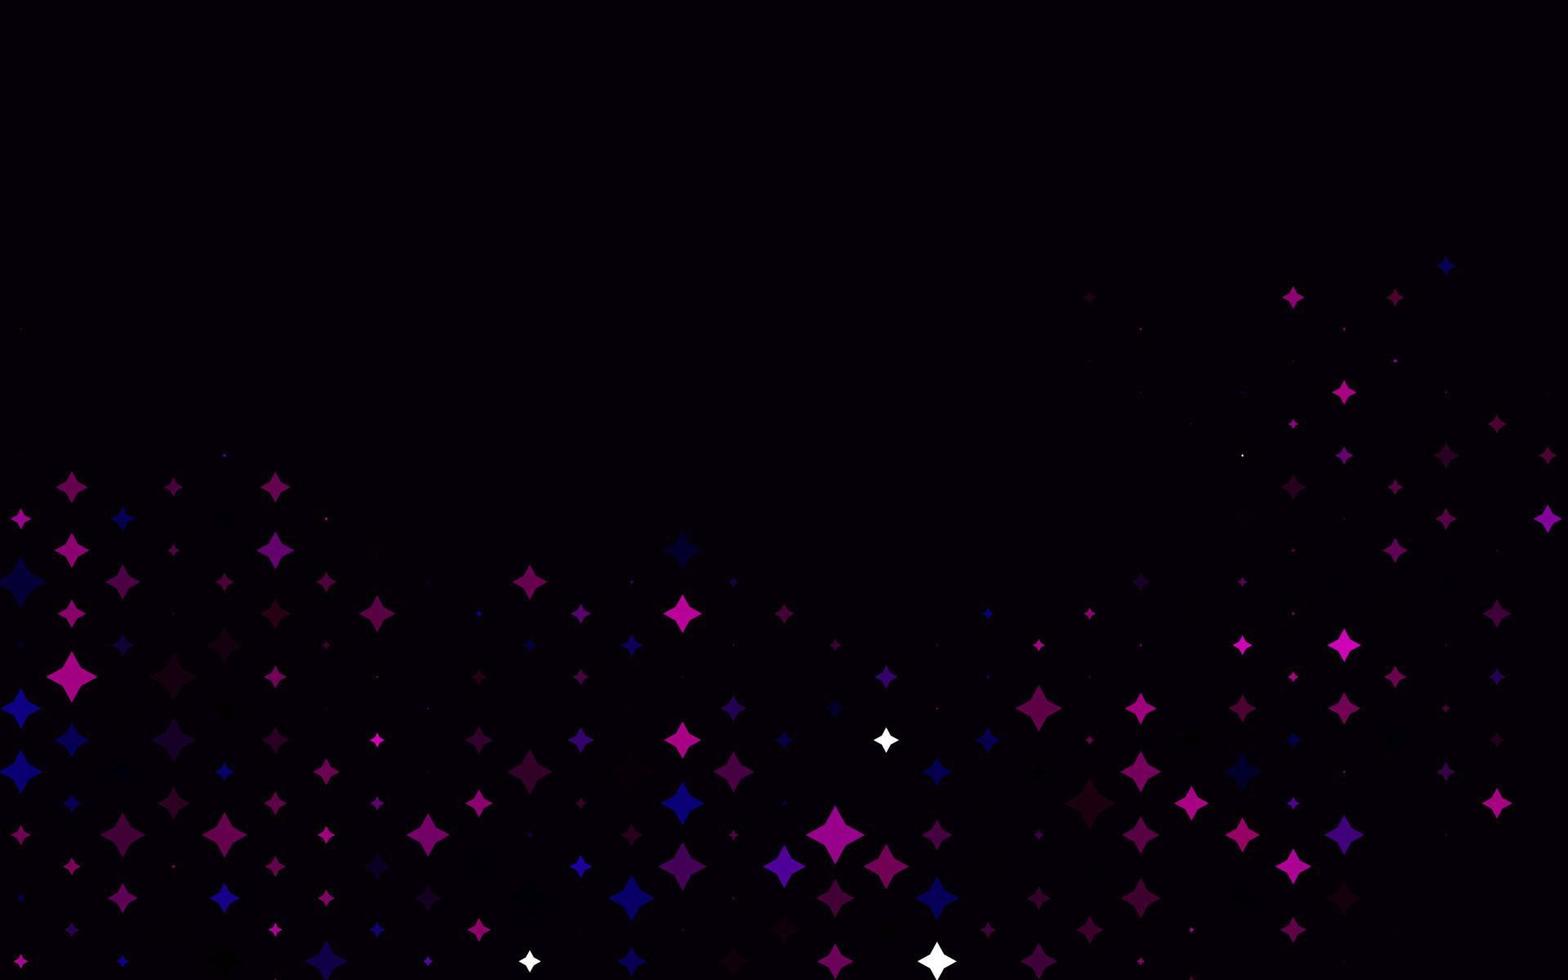 textura de vector púrpura claro con hermosas estrellas.